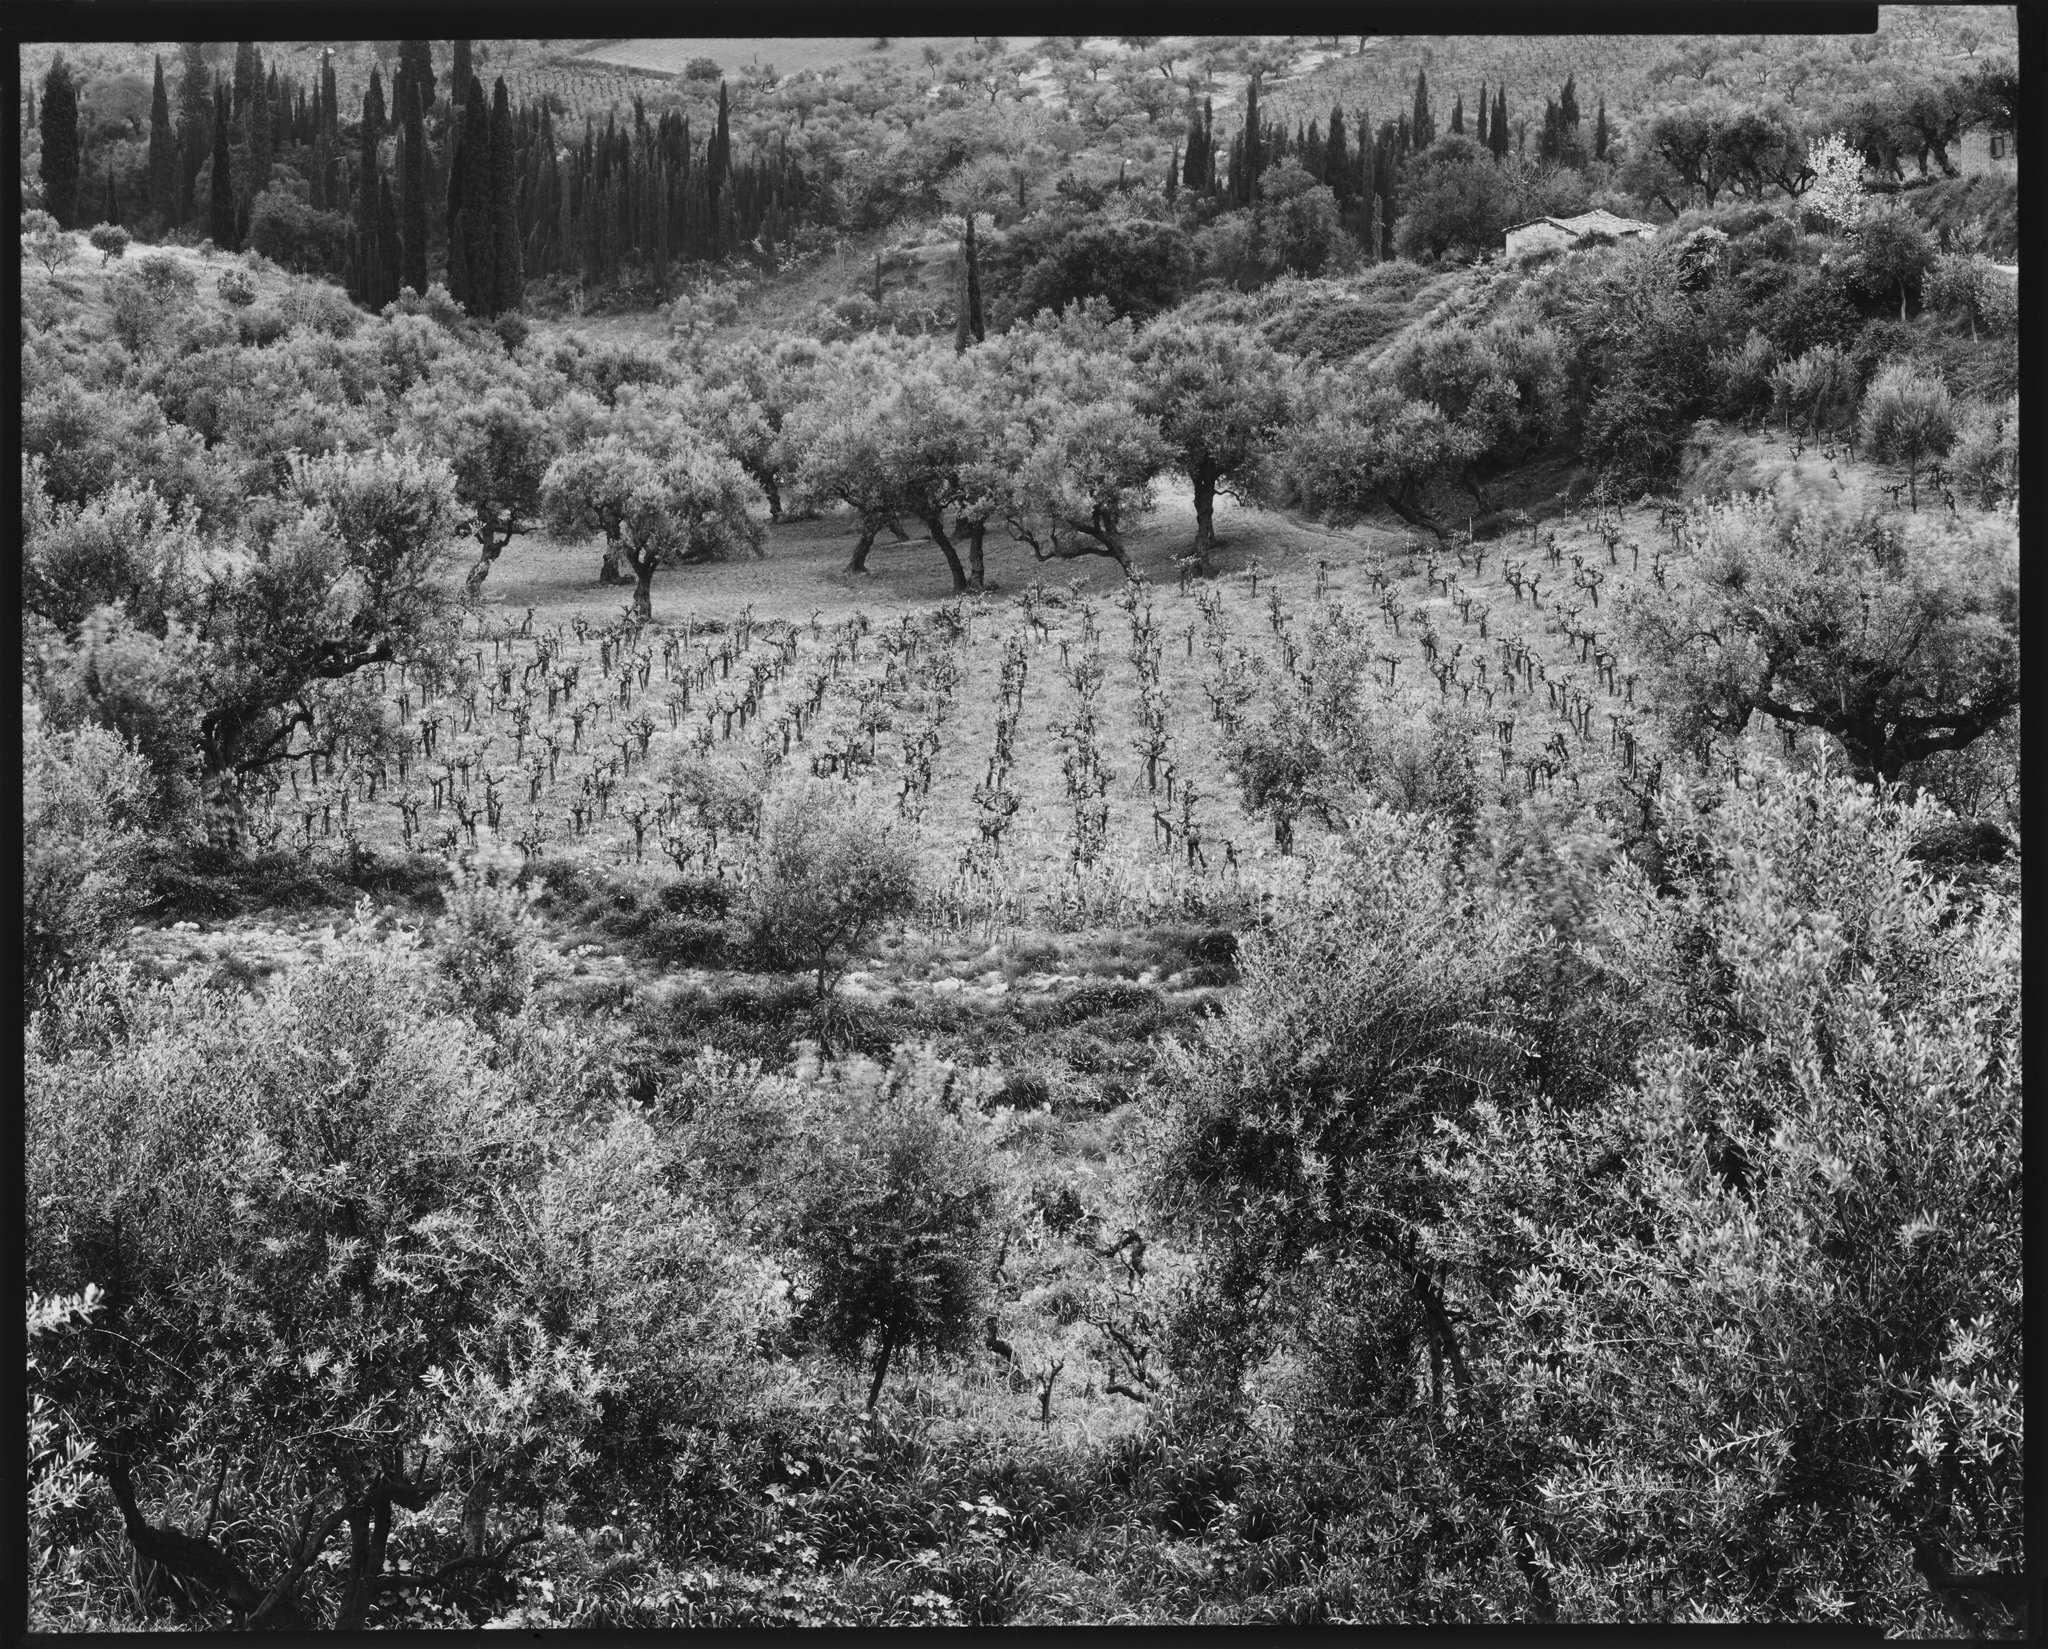 Greek Landscapes Portfolio_Vineyard, Crete_1982 © Nick Merrick.jpg